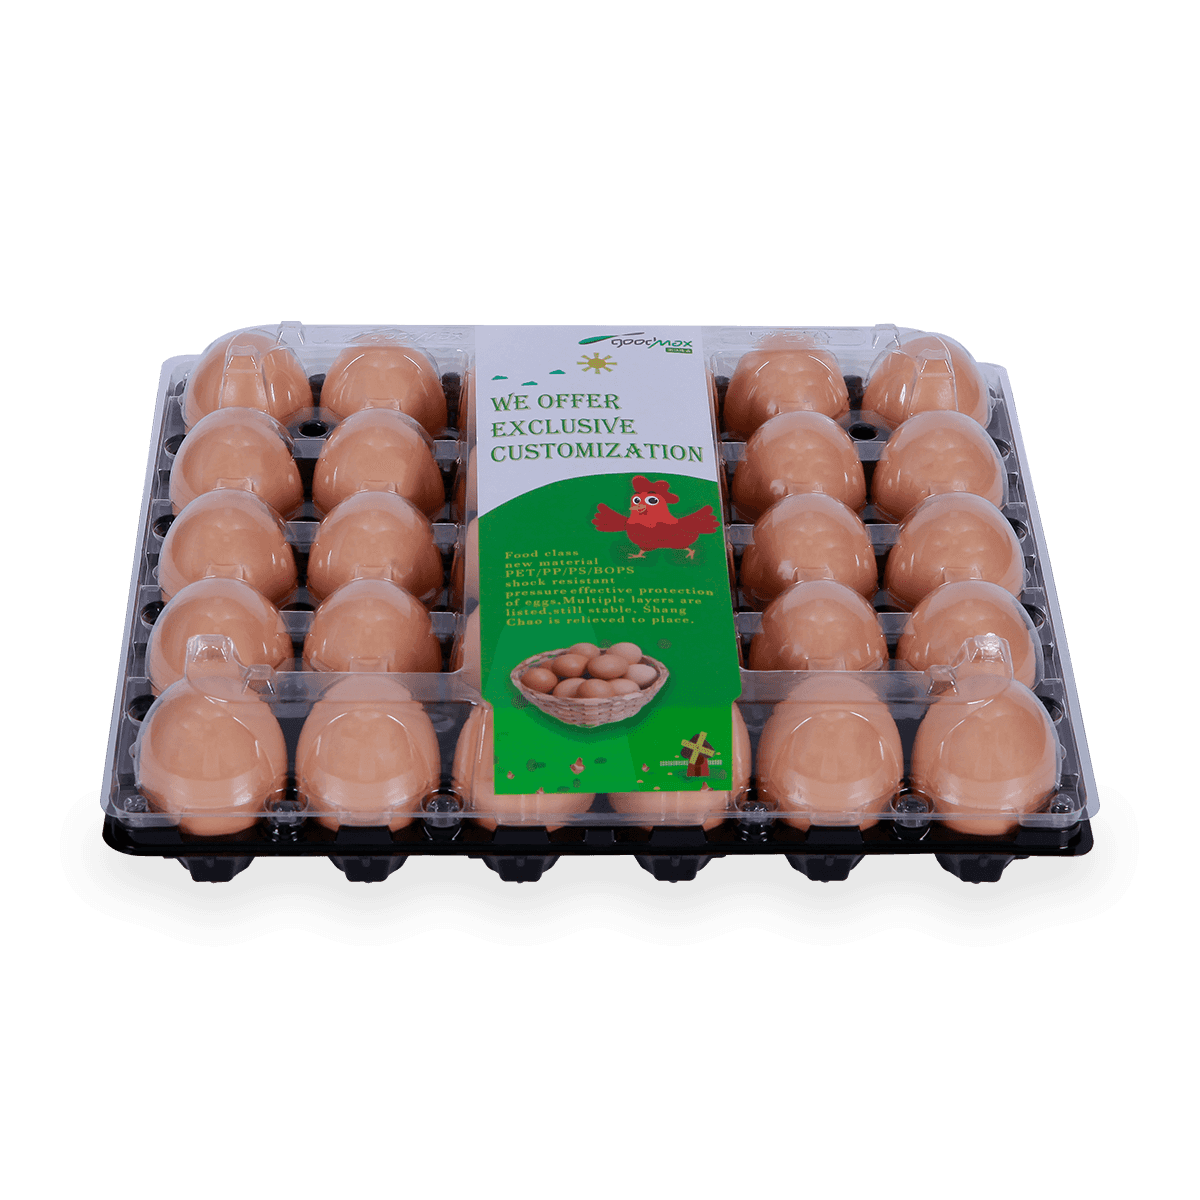 Cartón de huevos de 30 agujeros para granjas avícolas 